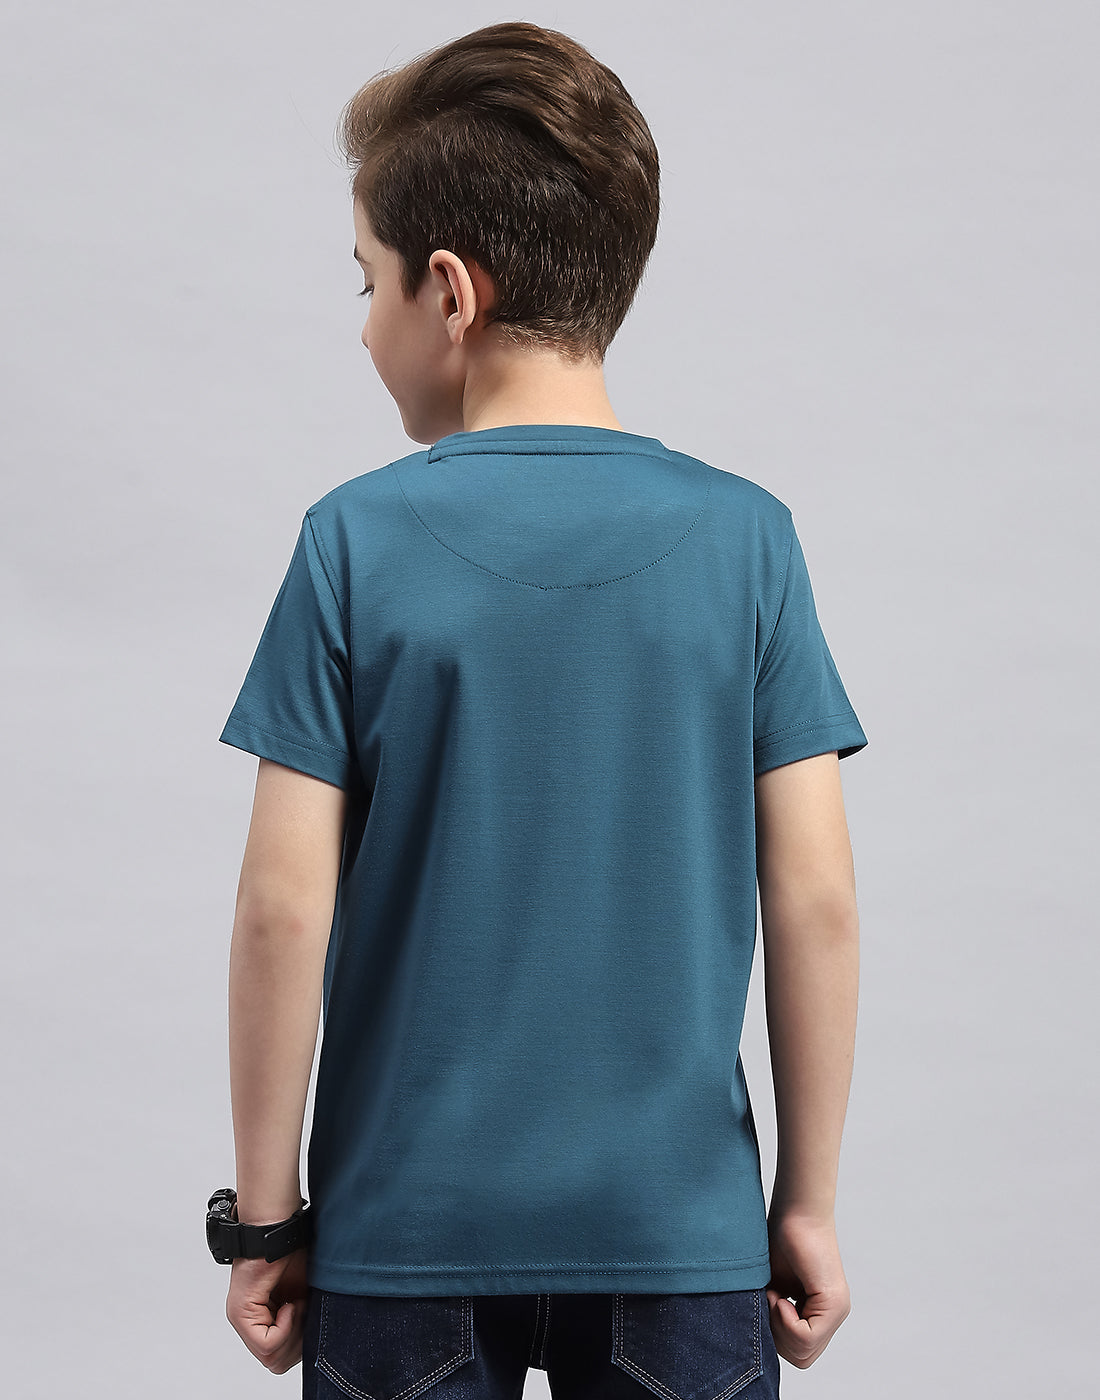 Boys Teal Blue Printed Round Neck Half Sleeve T-Shirt